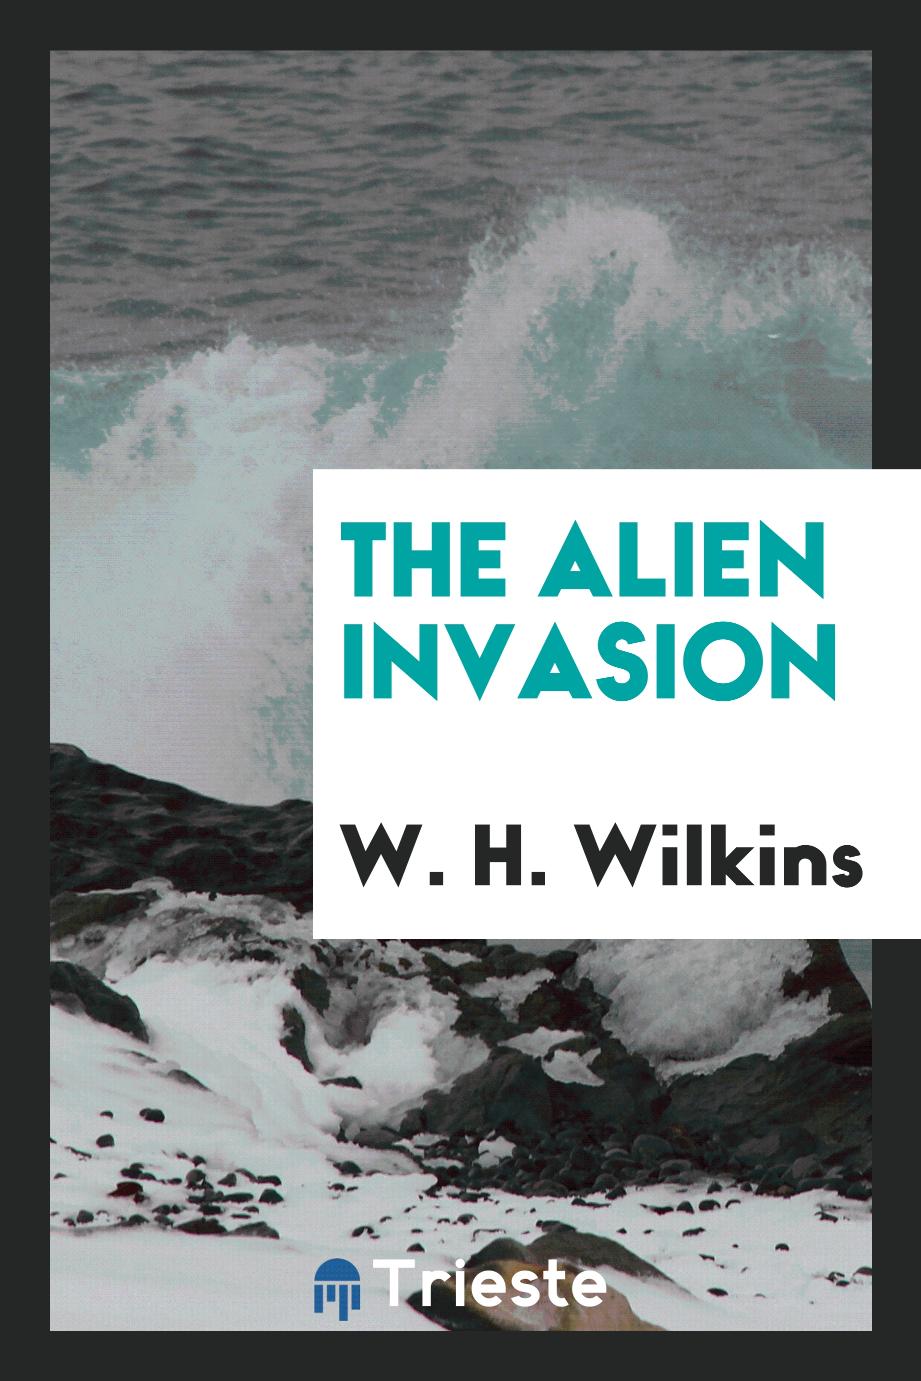 The alien invasion